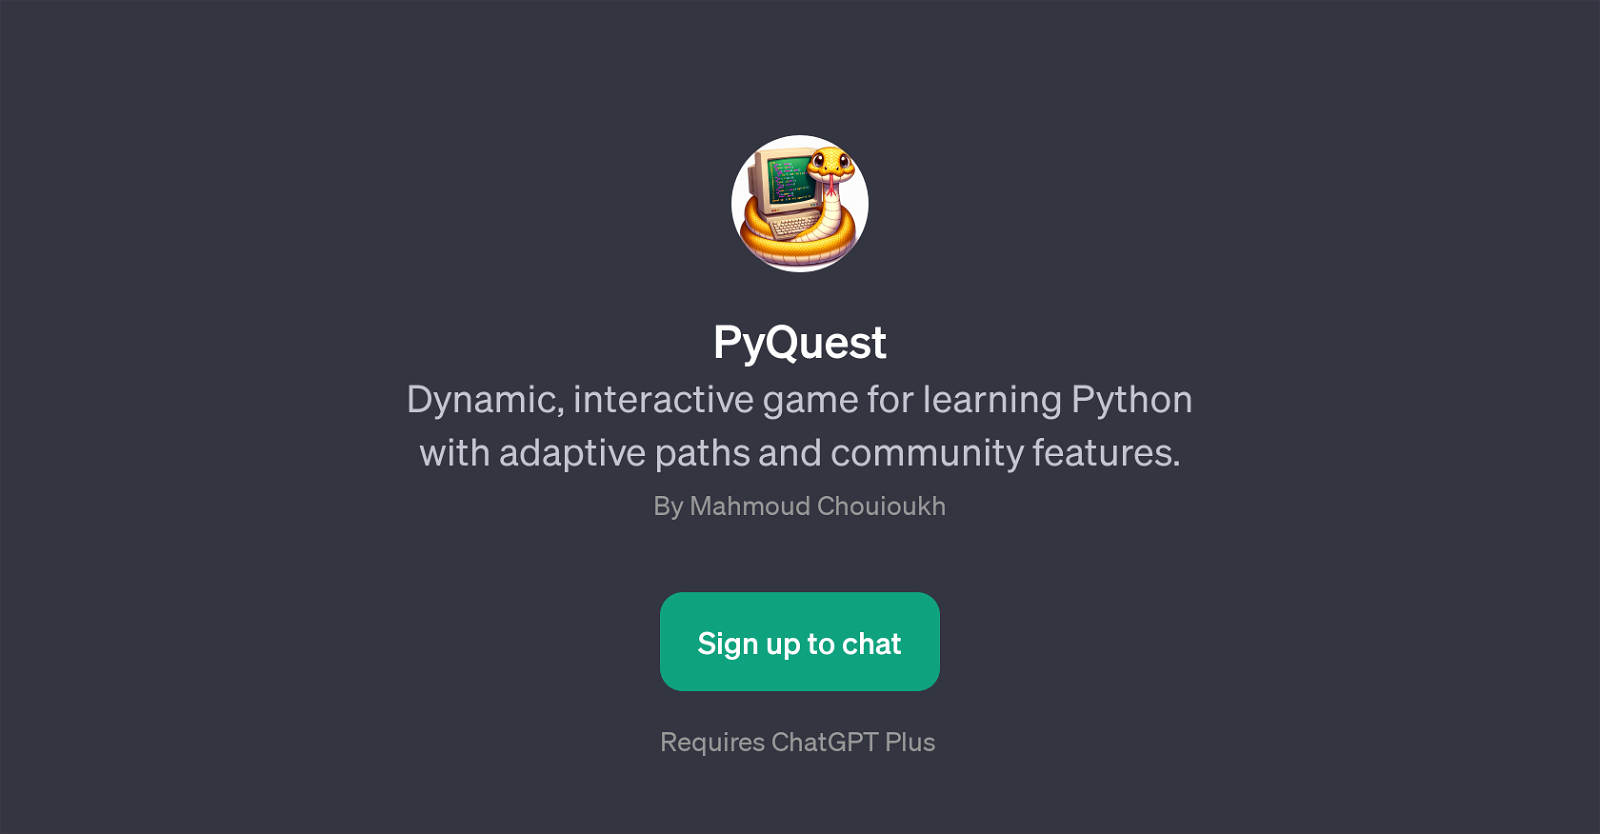 PyQuest website